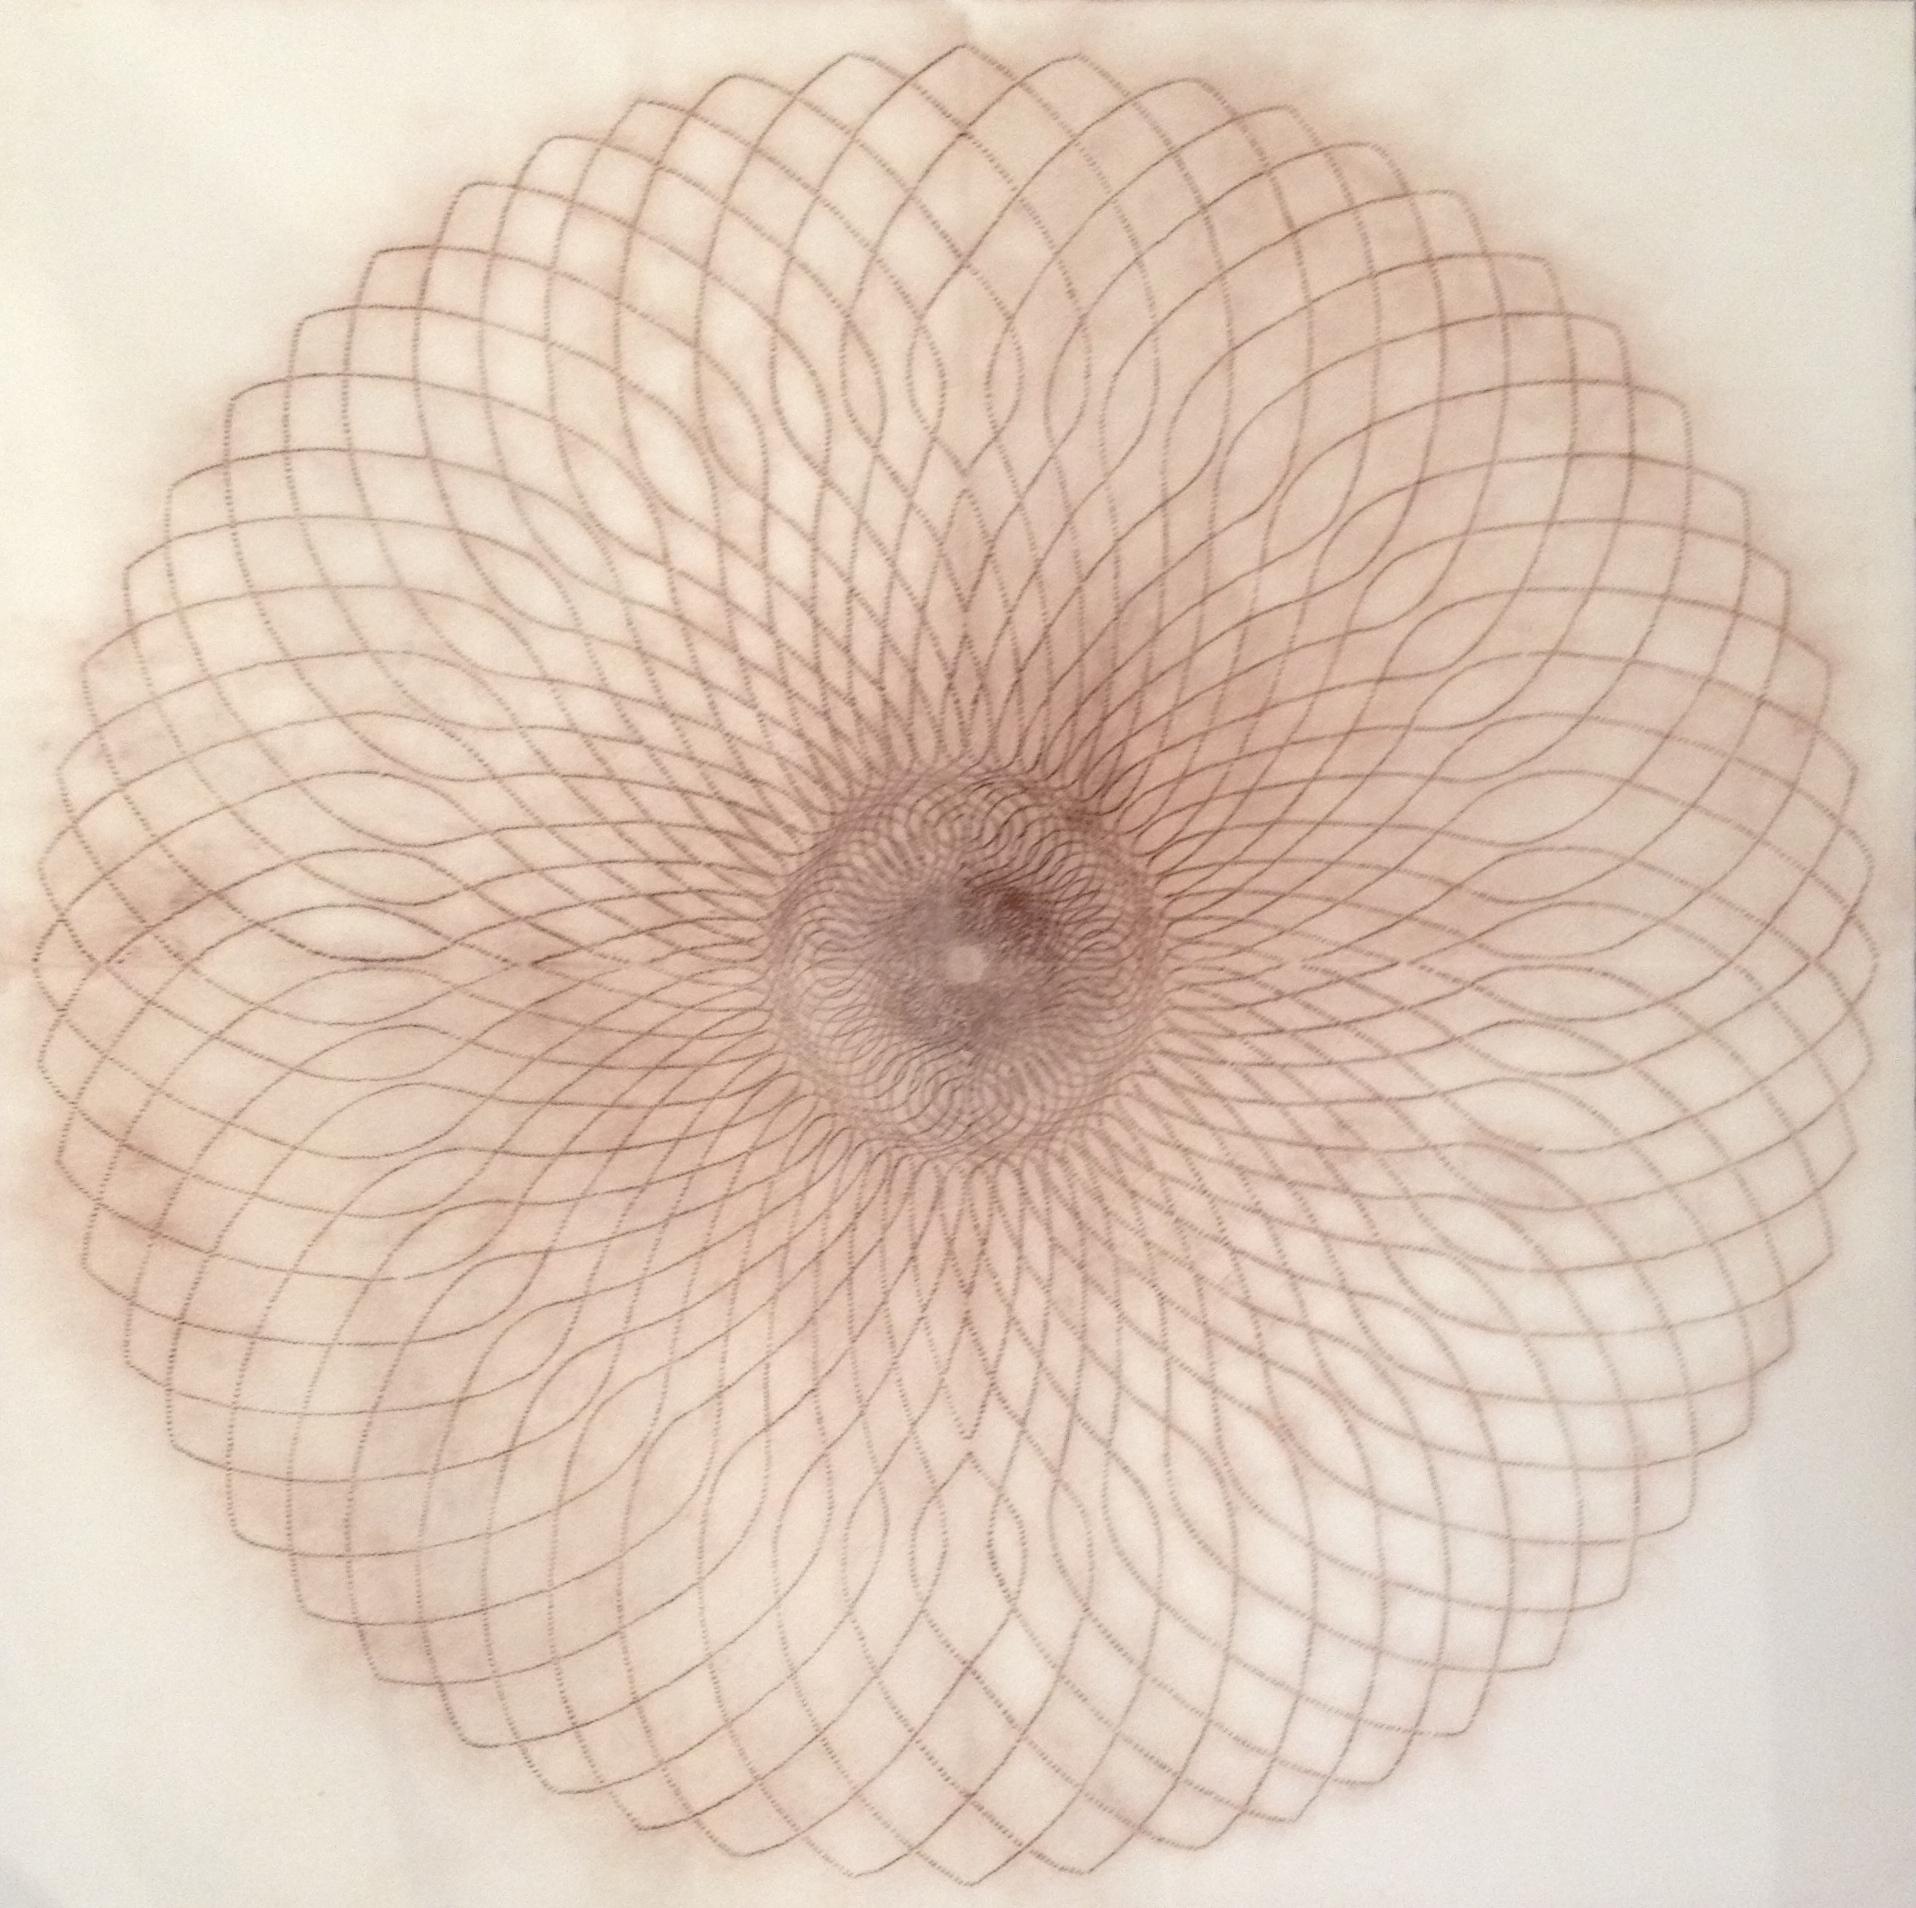 Mary Judge Abstract Drawing - Exotic Hex Series 12 03 03 Reddish Brown Circular Mandala Line Drawing in Square